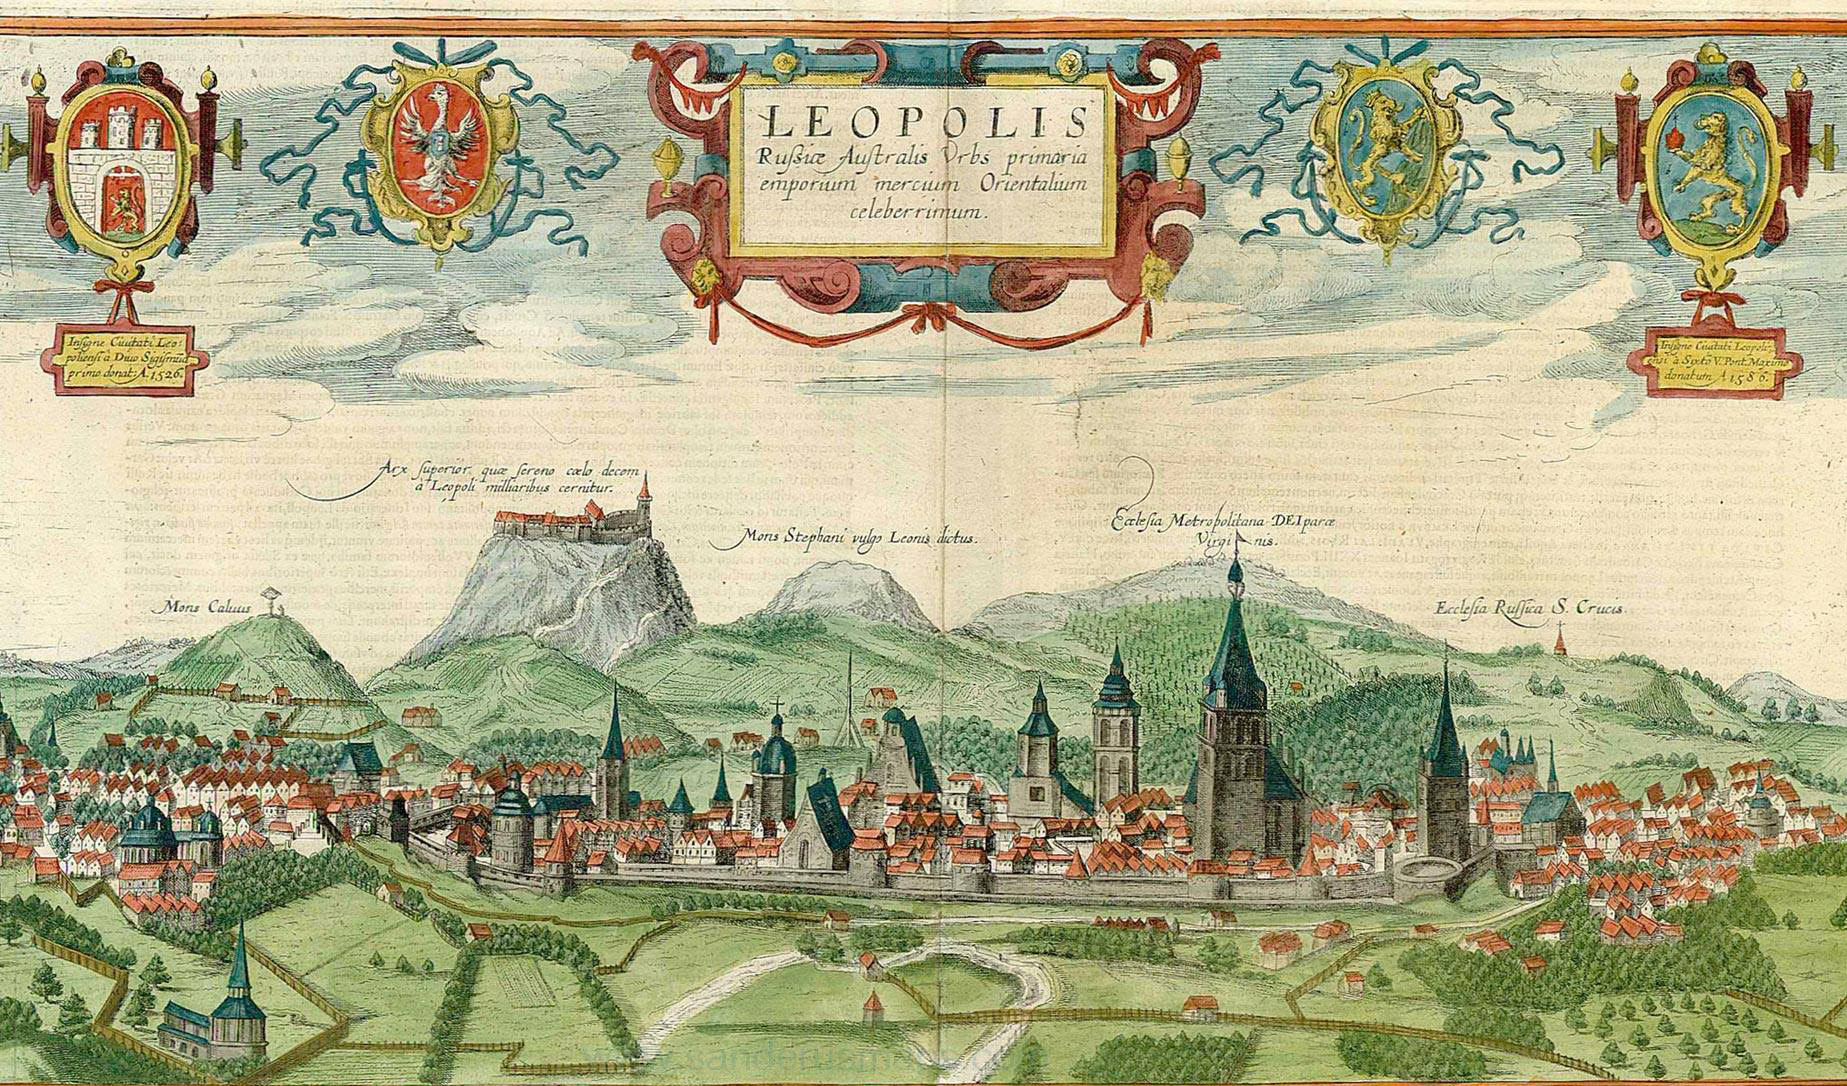 Leopolis 1527